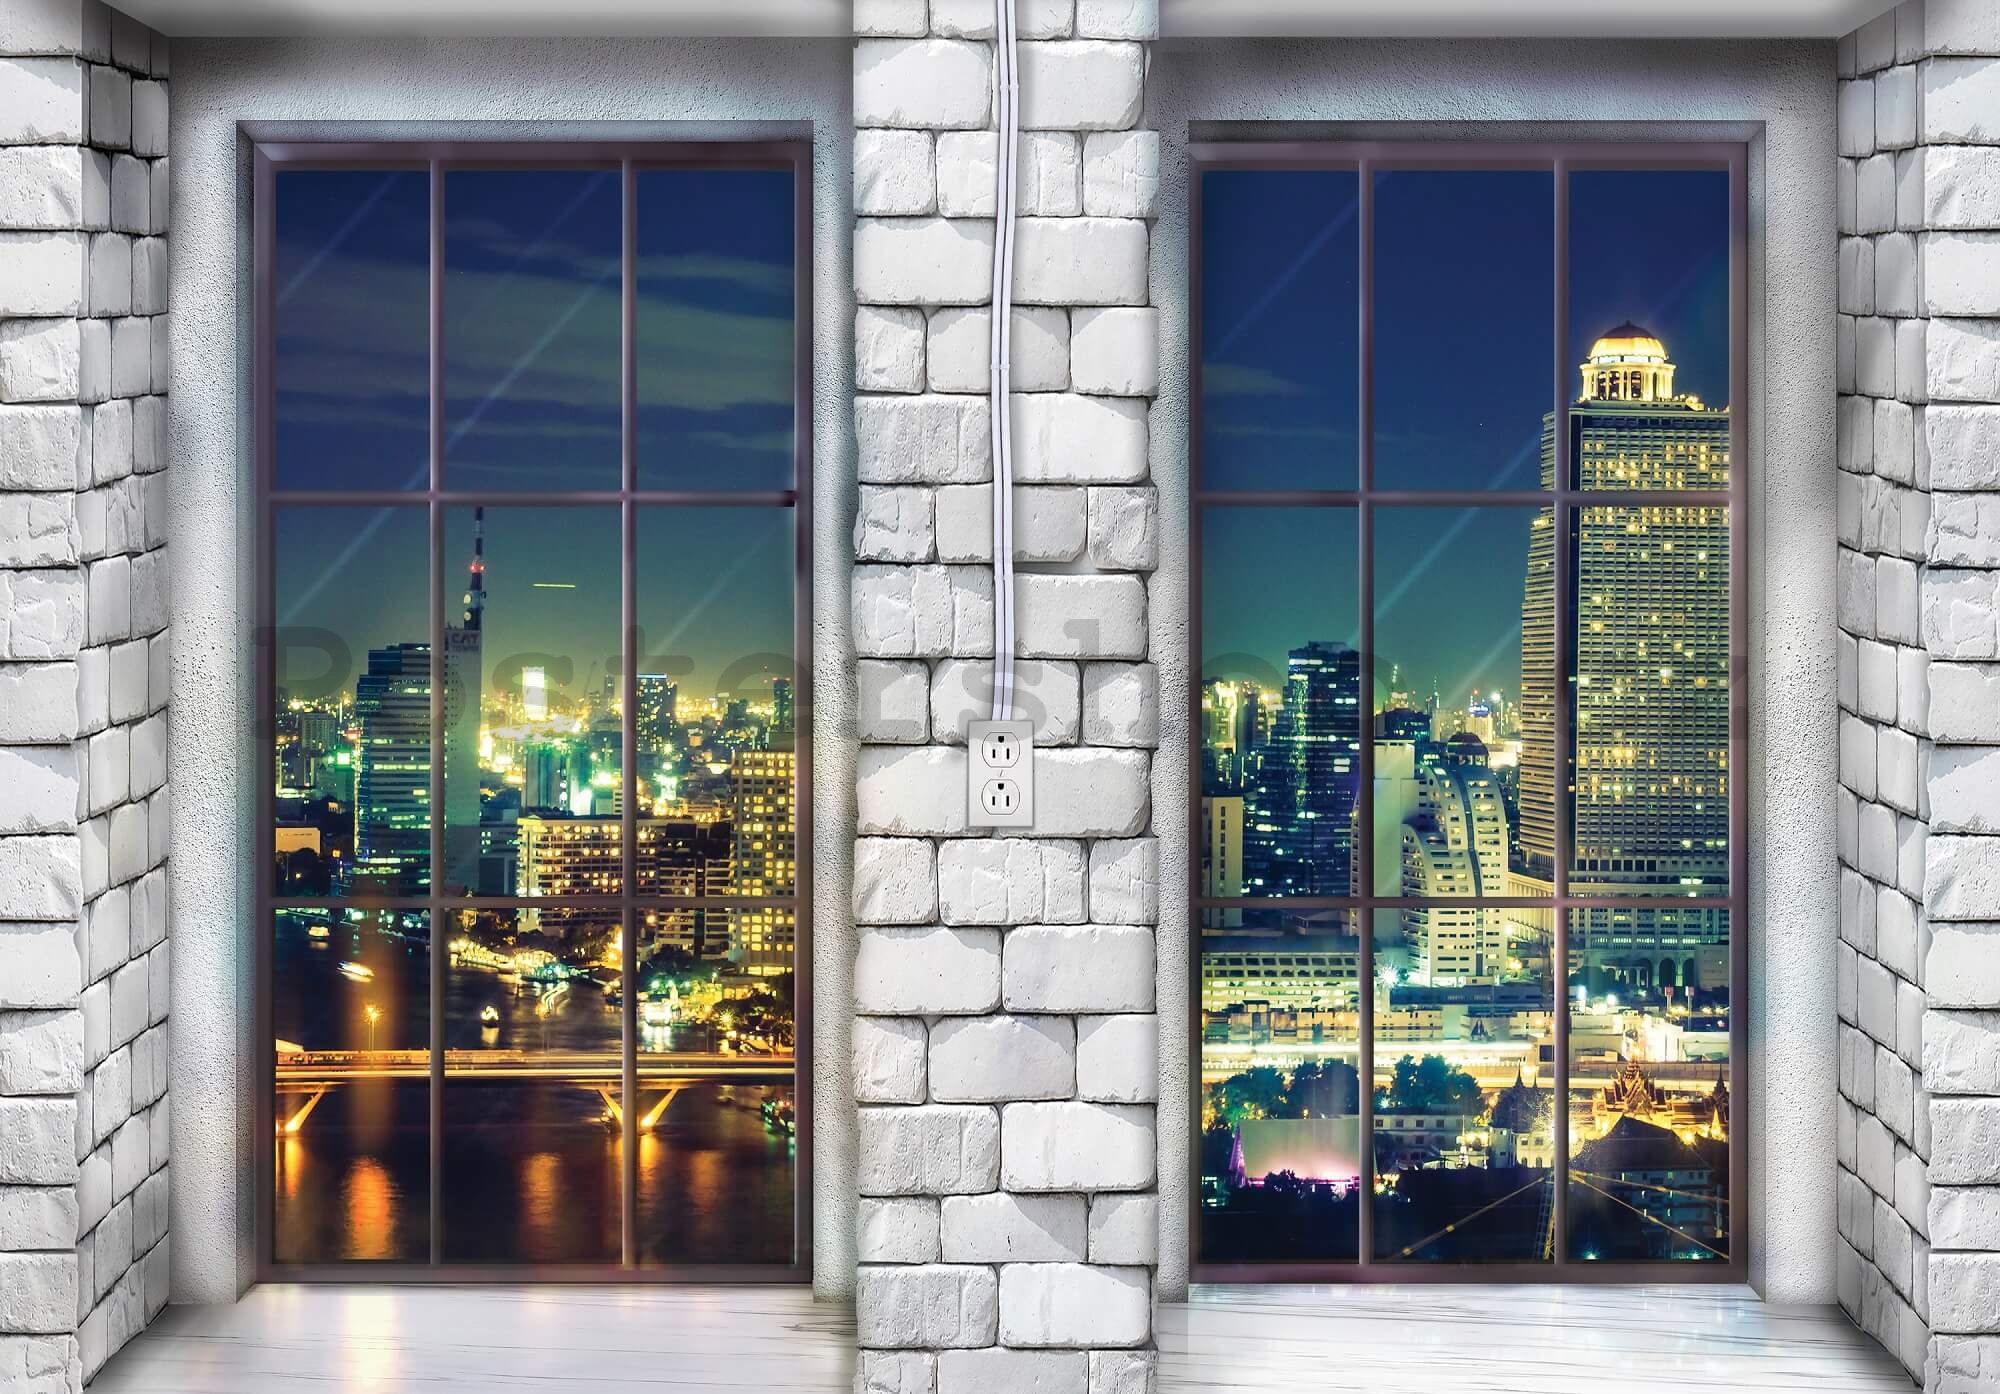 Fototapeta vliesová: Okno do města (1) - 254x368 cm